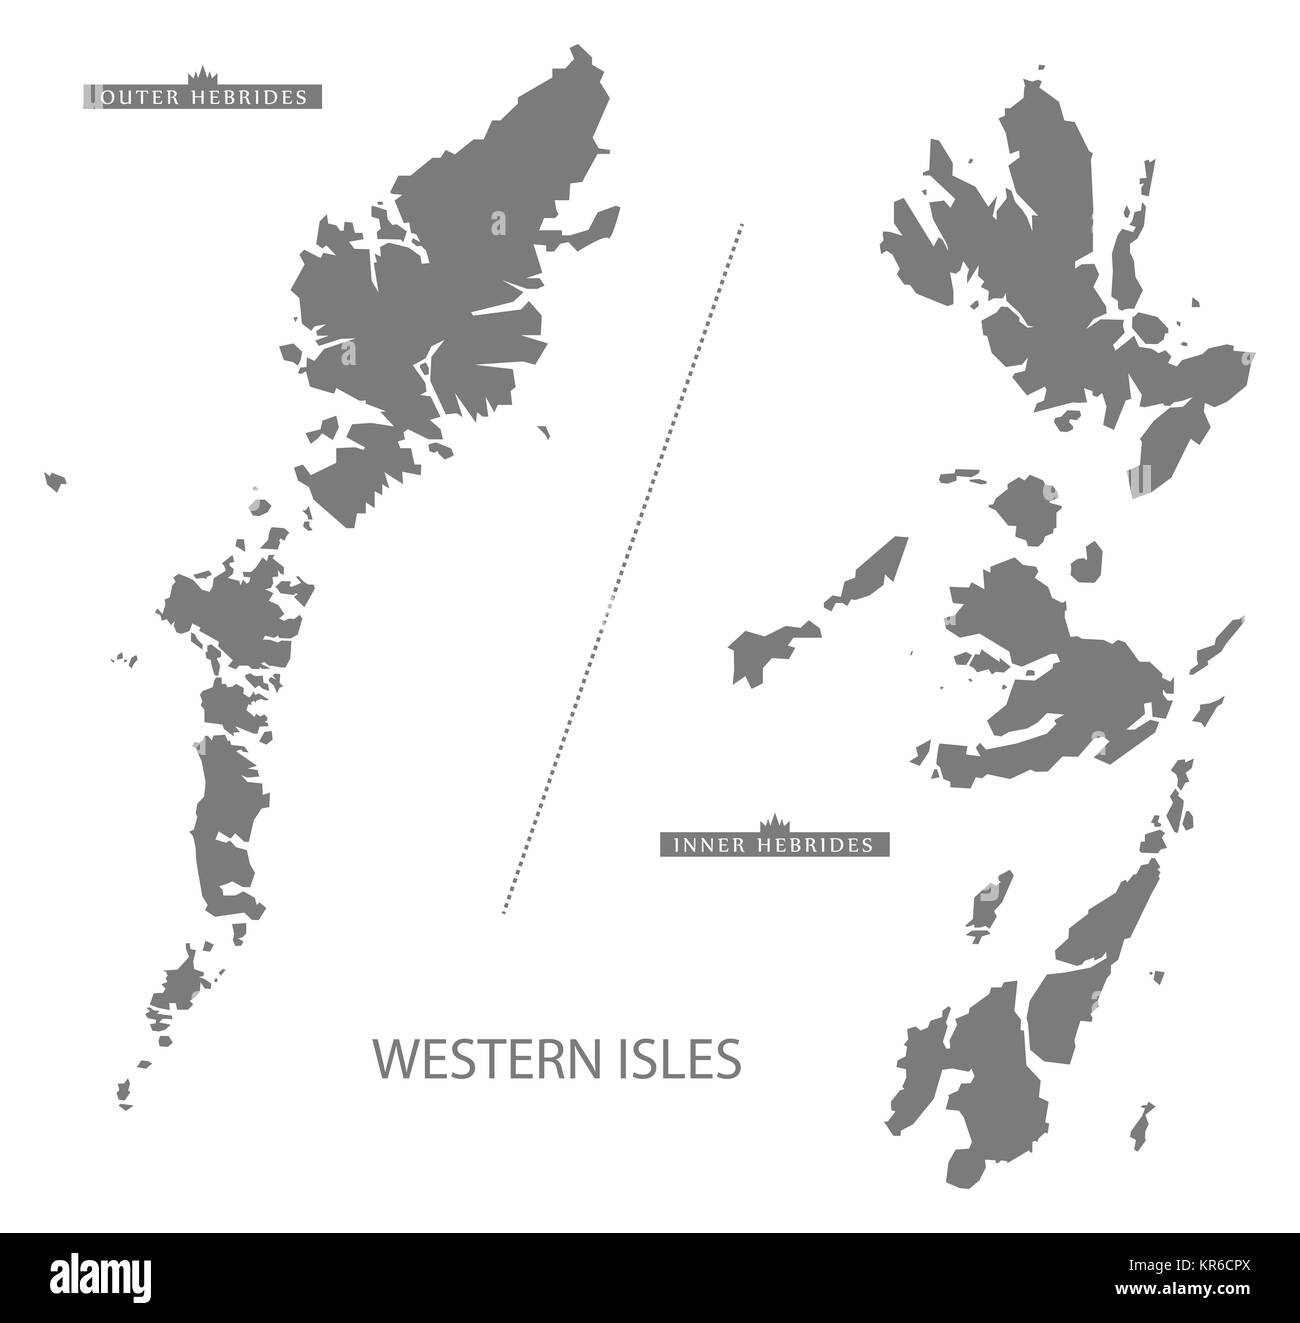 Western Isles Scotland Map grey Stock Photo - Alamy